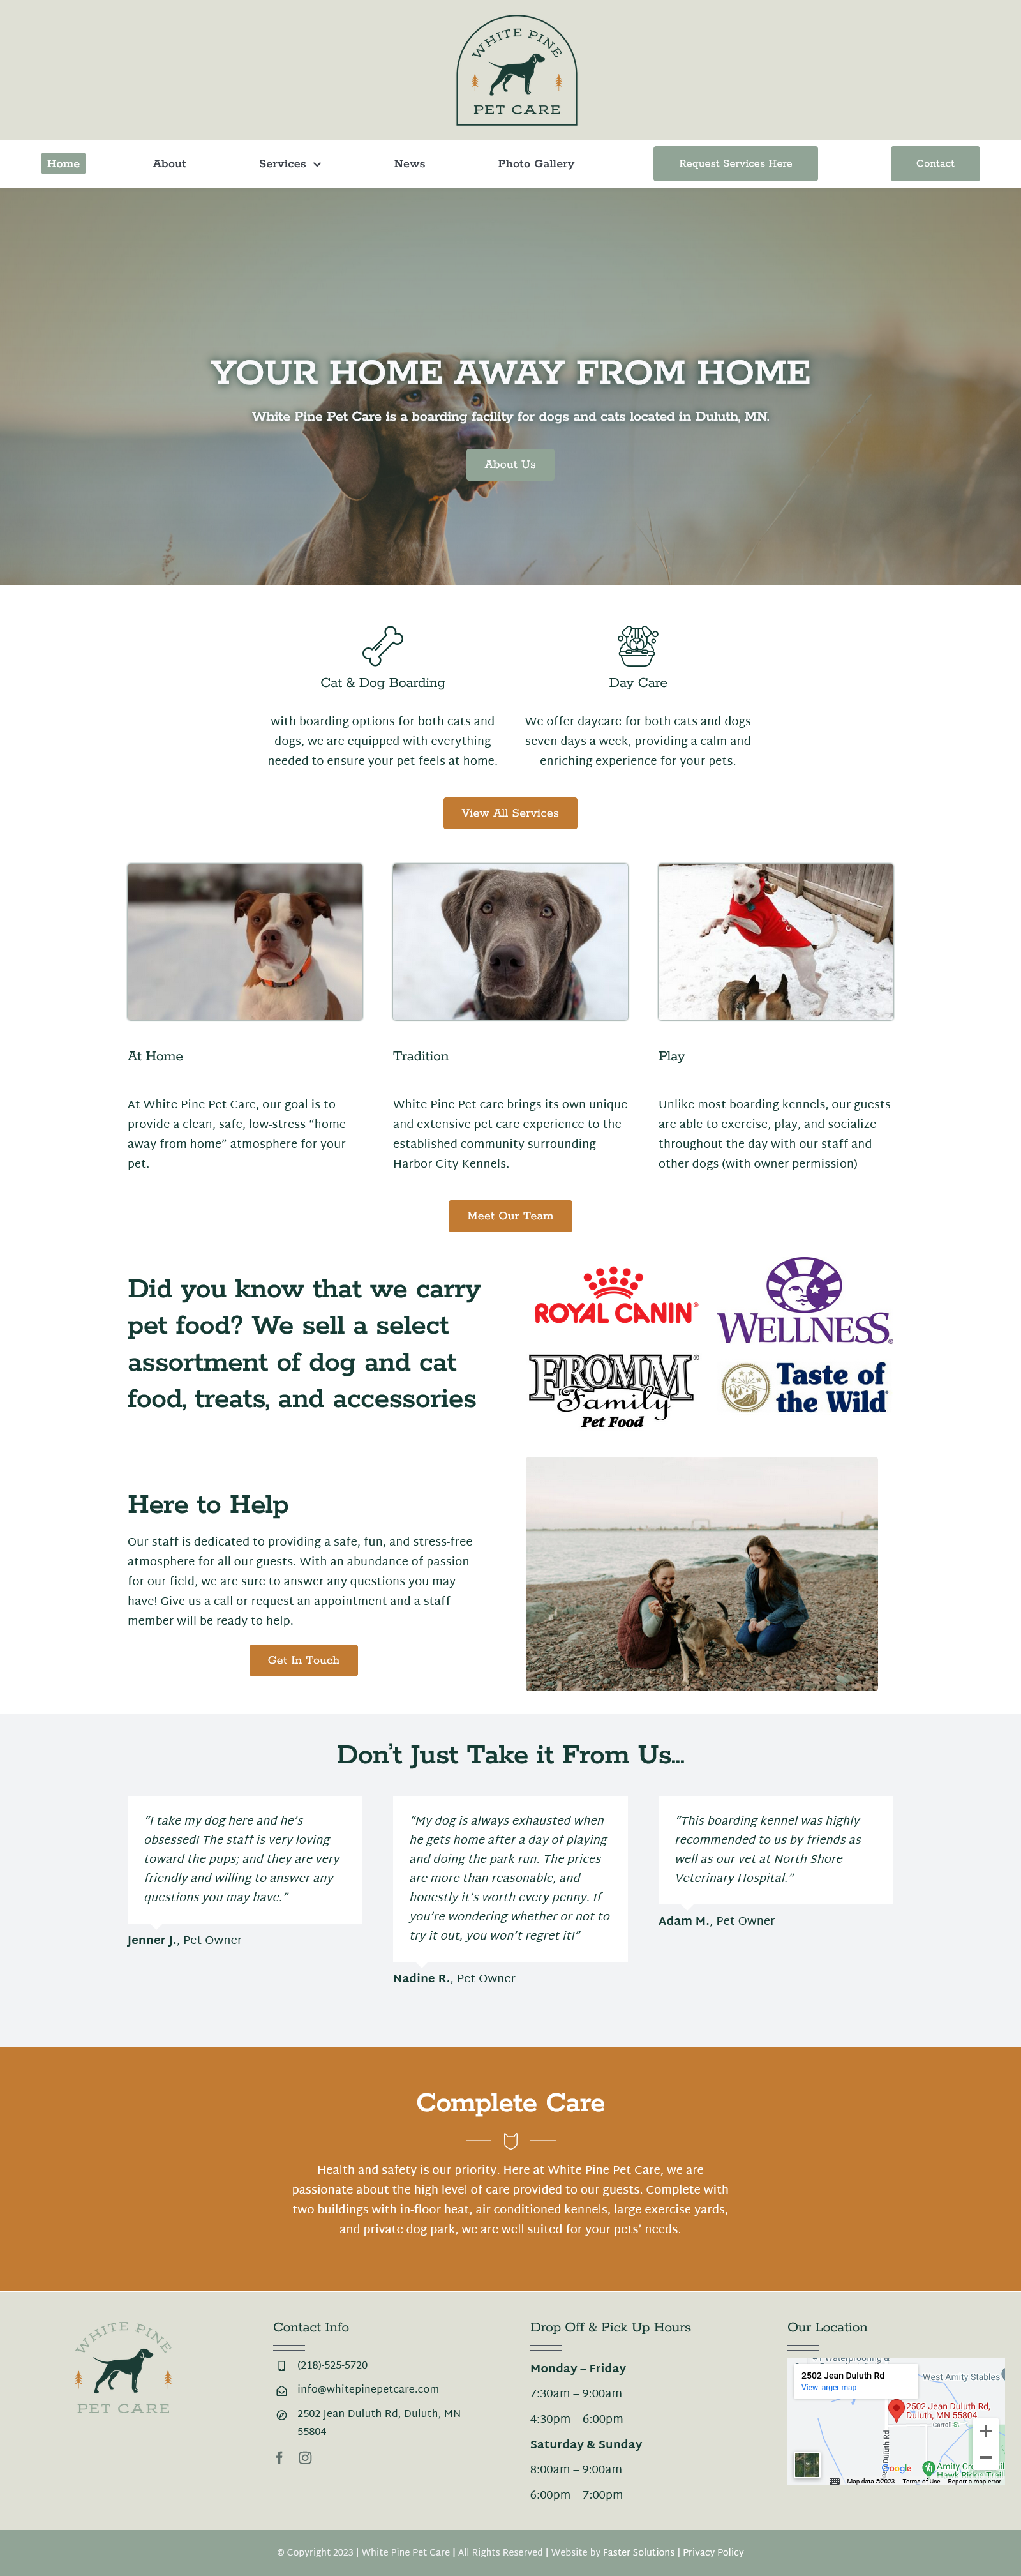 White Pine Pet Care - Desktop